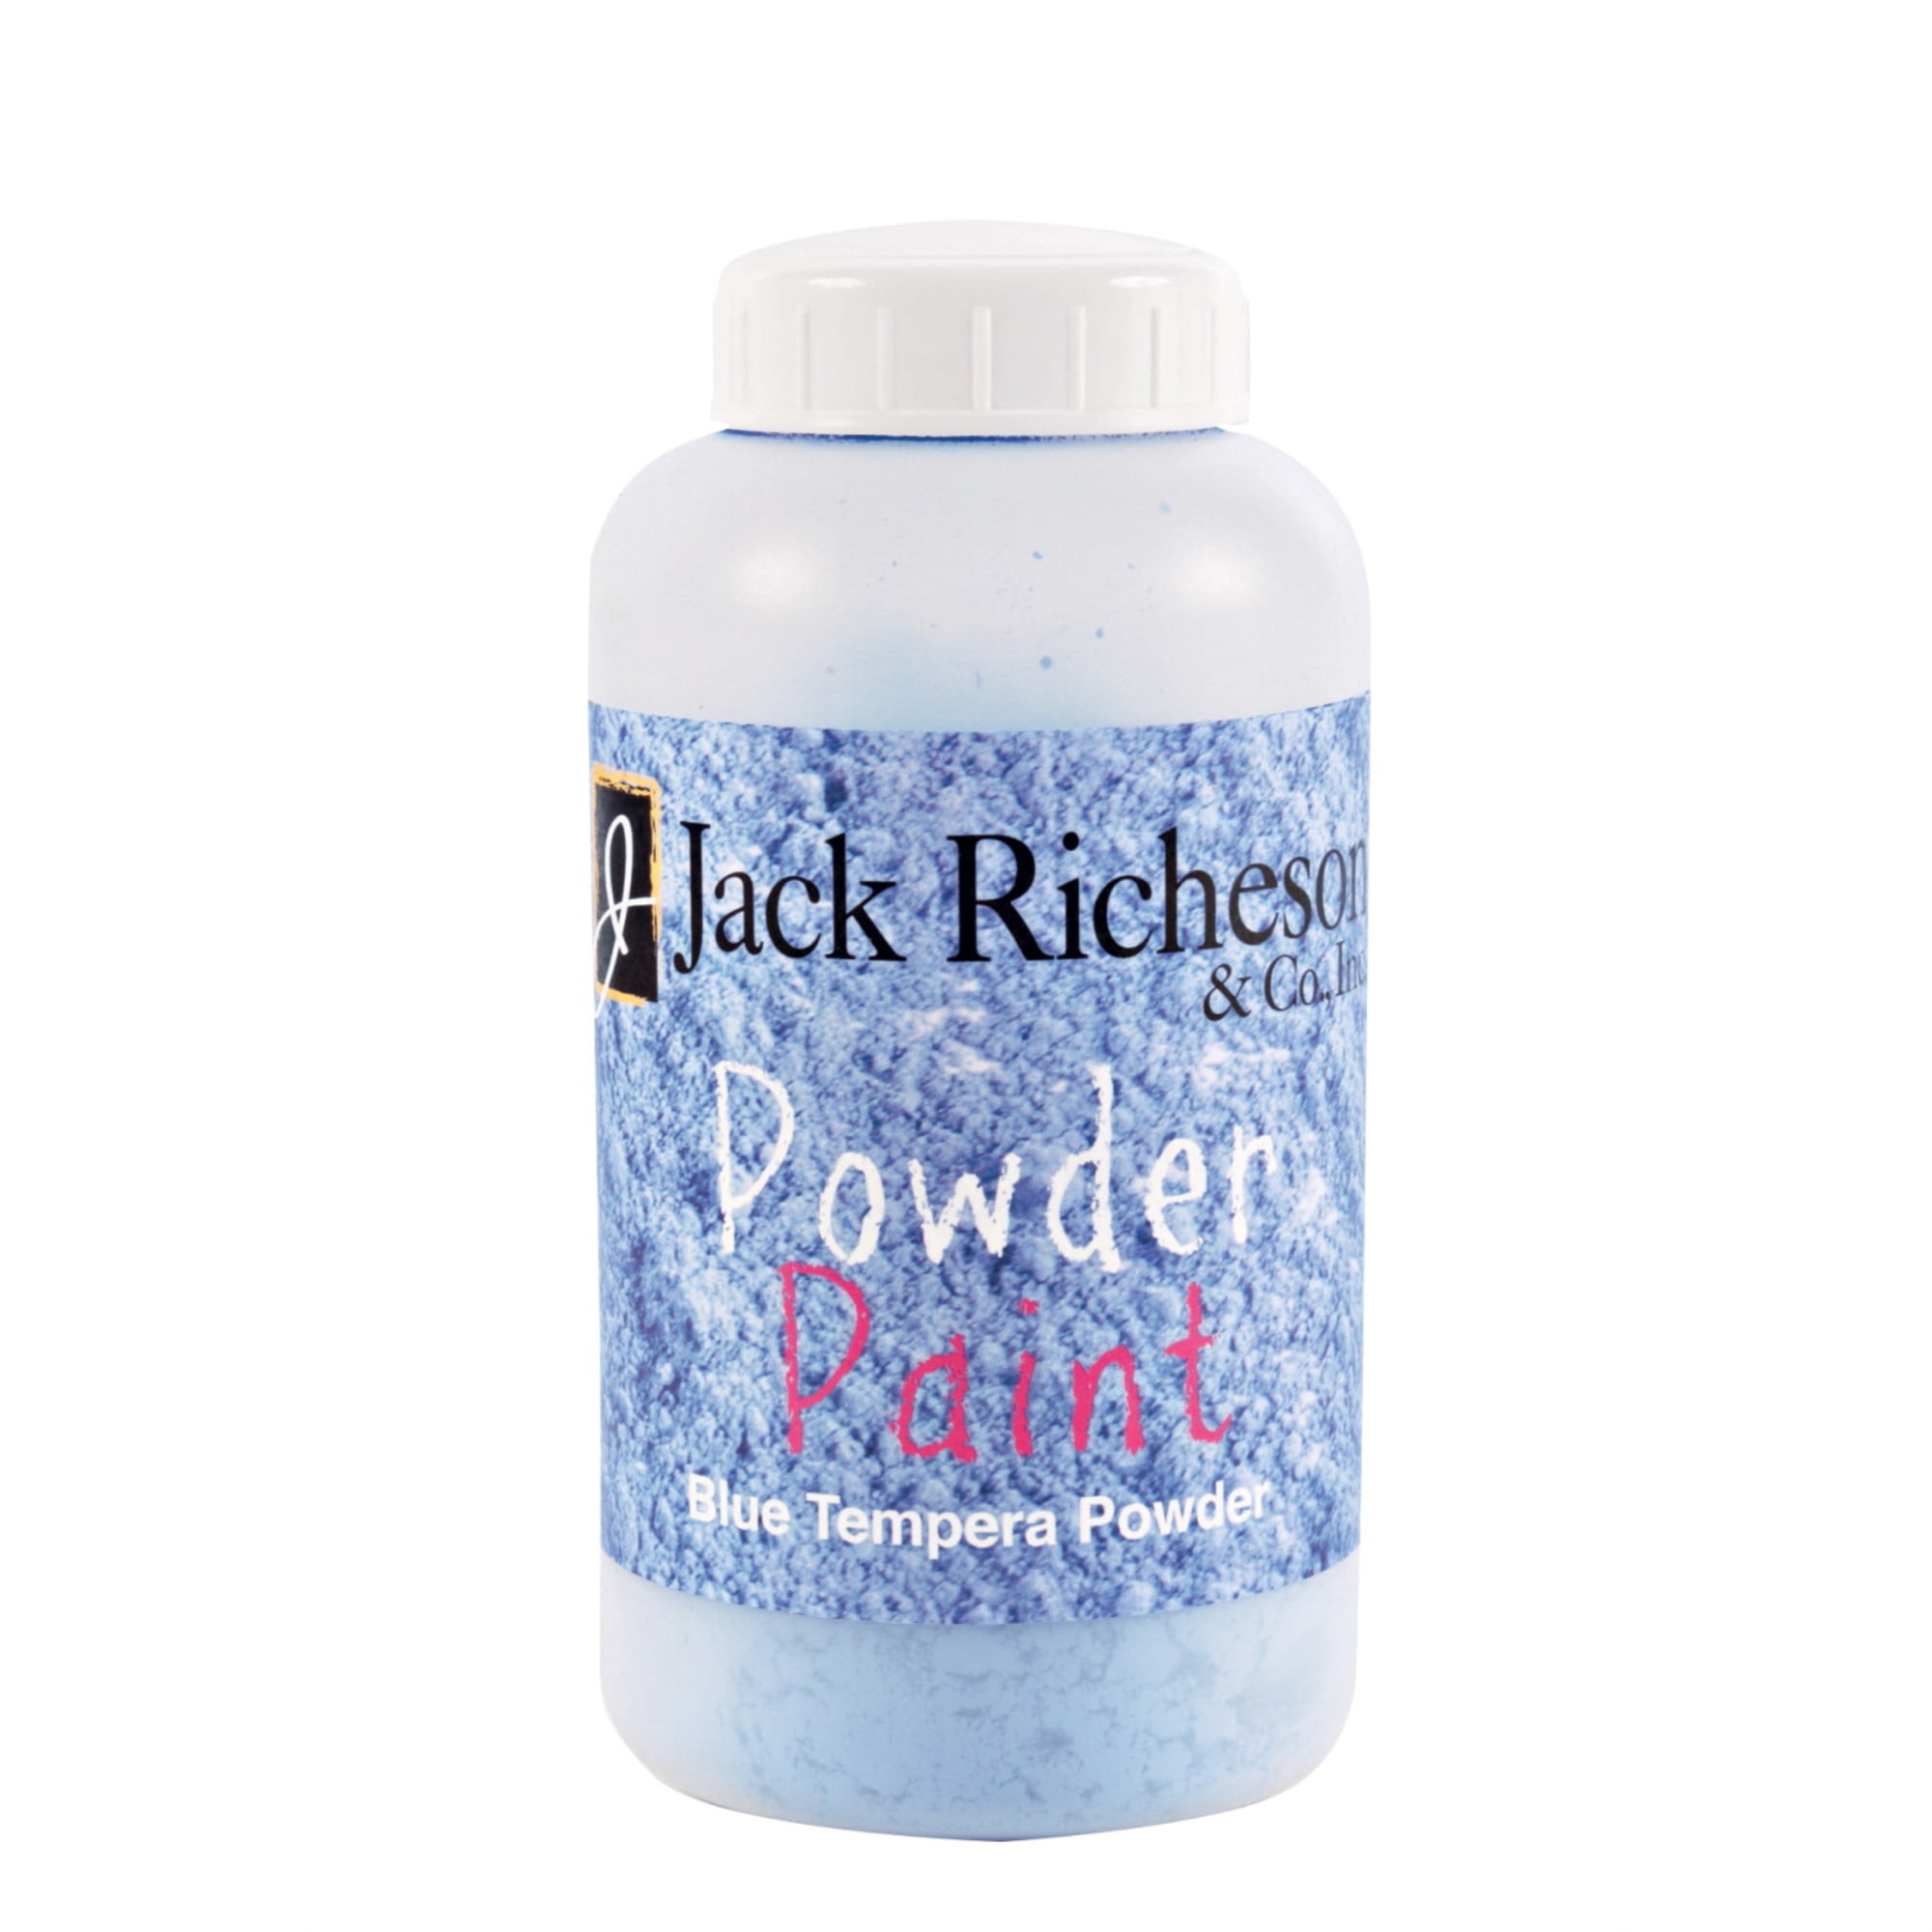 Jack Richeson 101505 Powder Paint, Green Dry Tempera